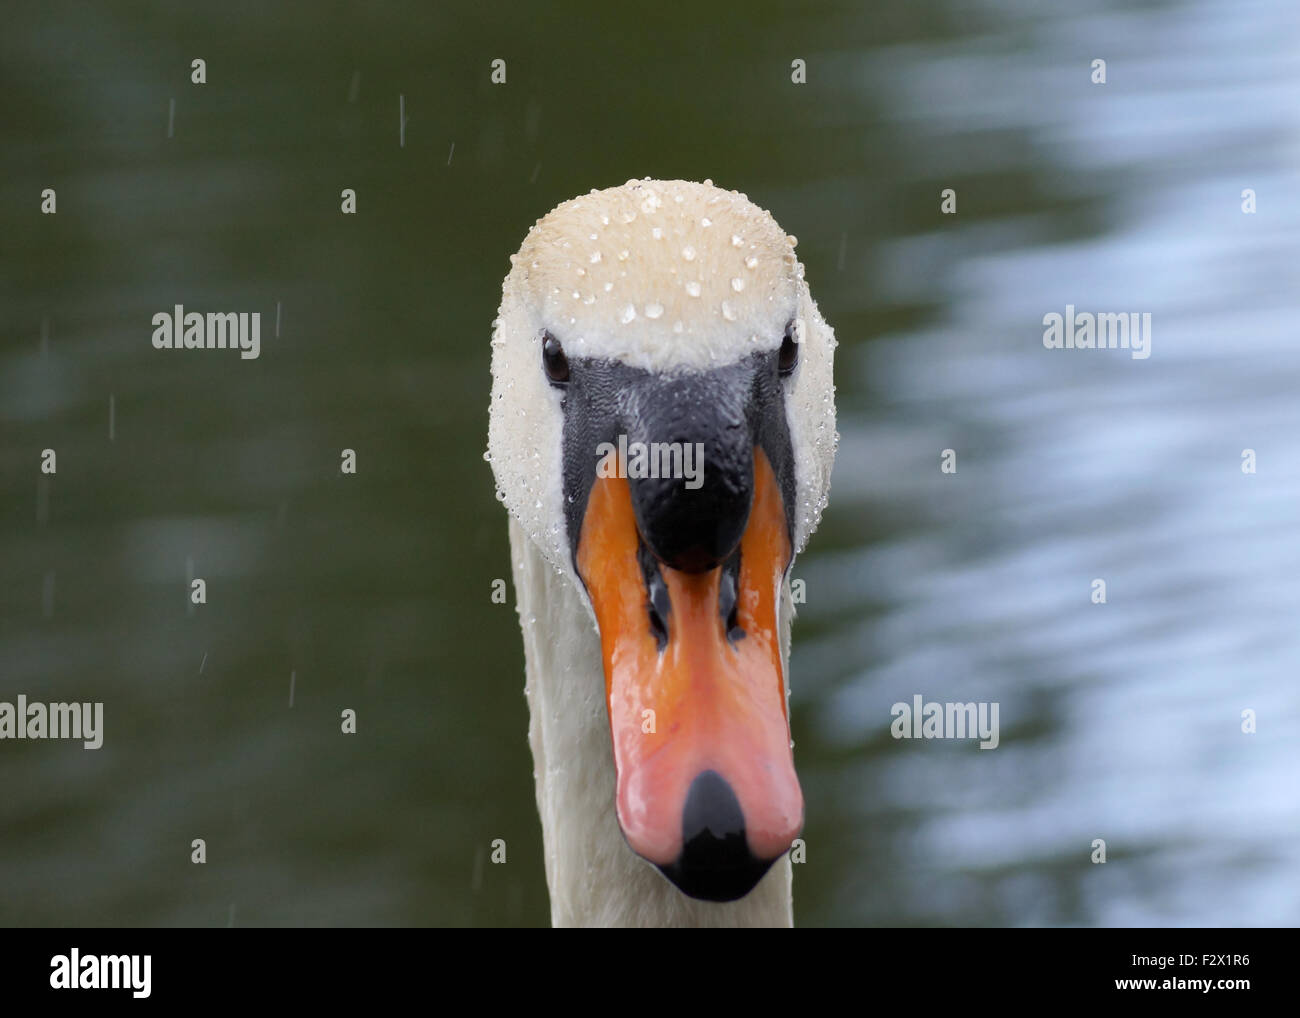 Swan with orange beak/ bill looking at camera in the Rain with rain drops in Rouken Glen Park Stock Photo